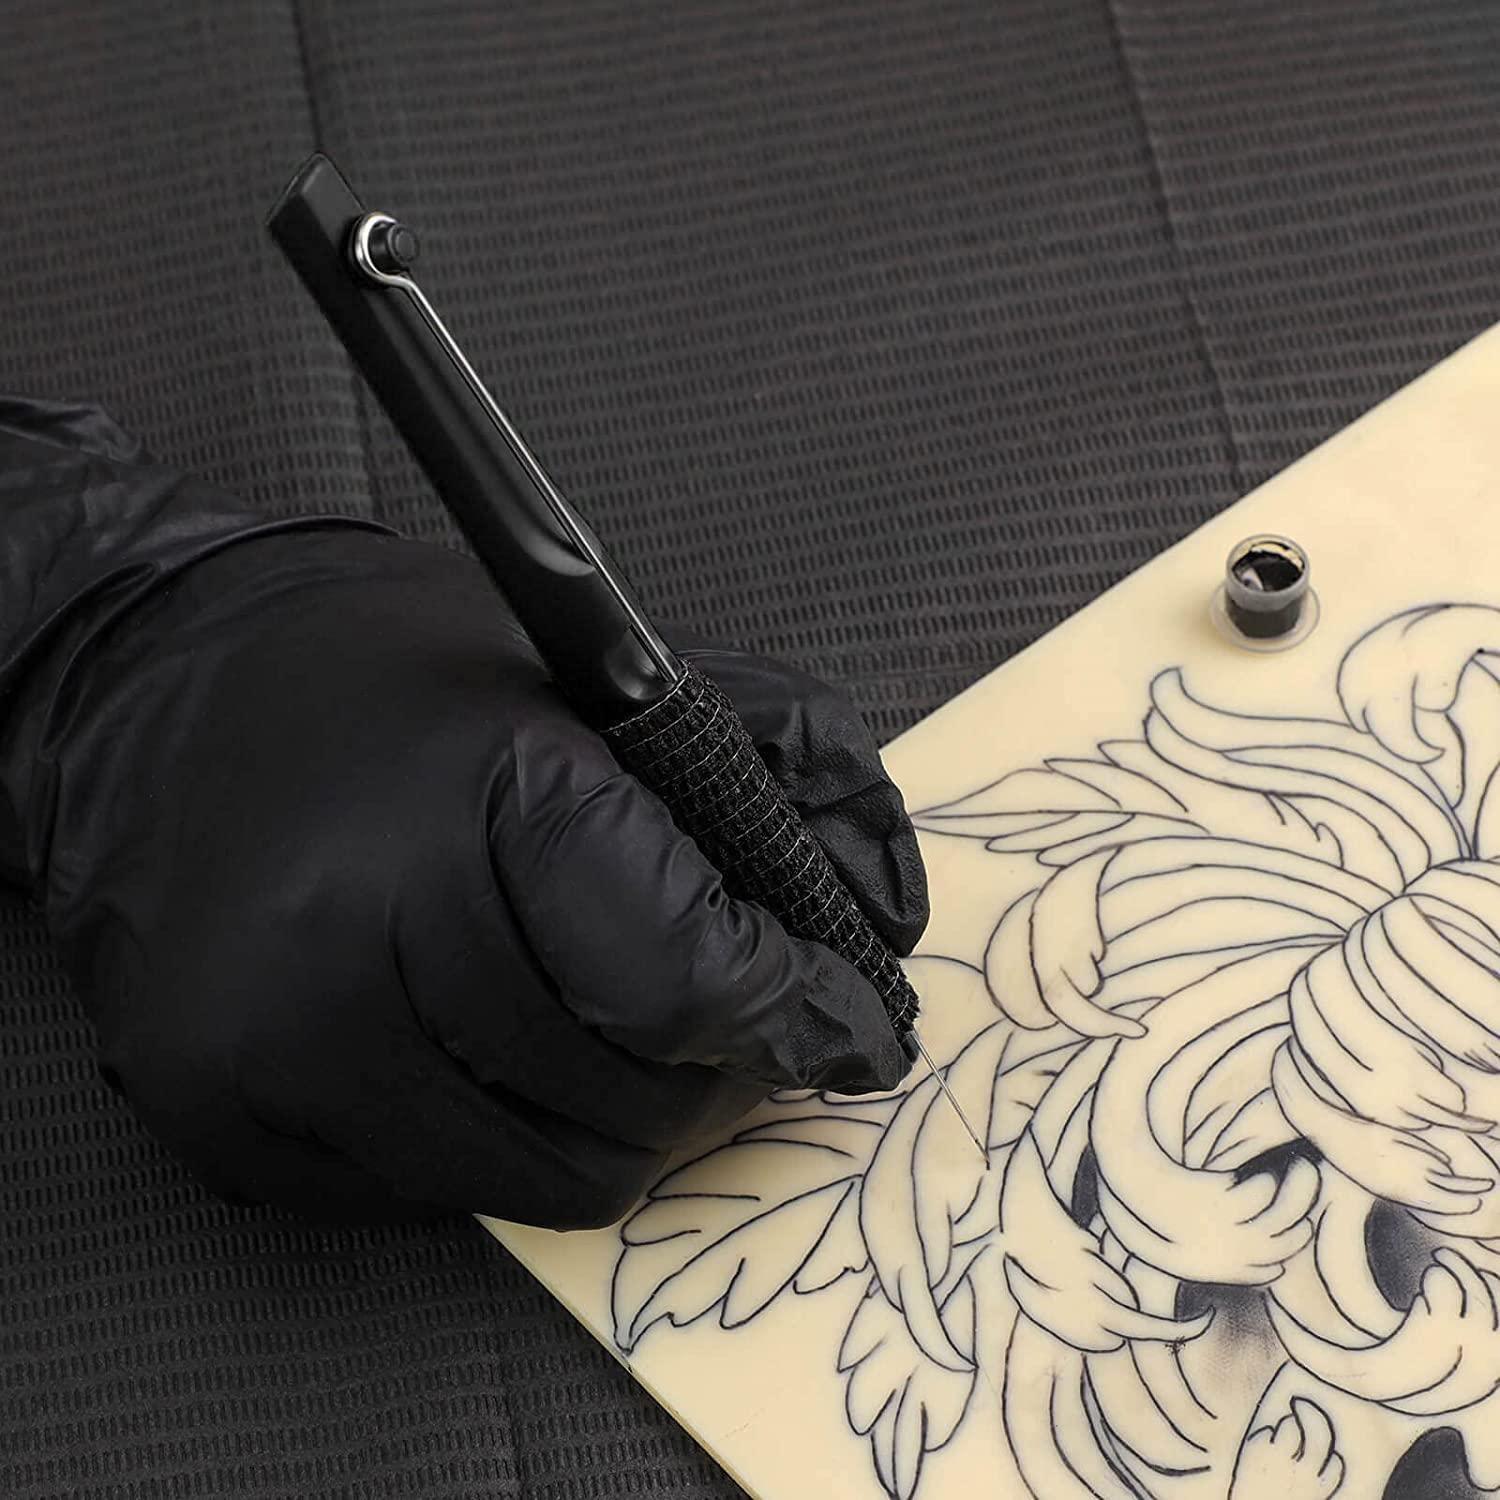 Moricher Hand Poke a Stick Tattoo Kit DIY Tattoo India | Ubuy